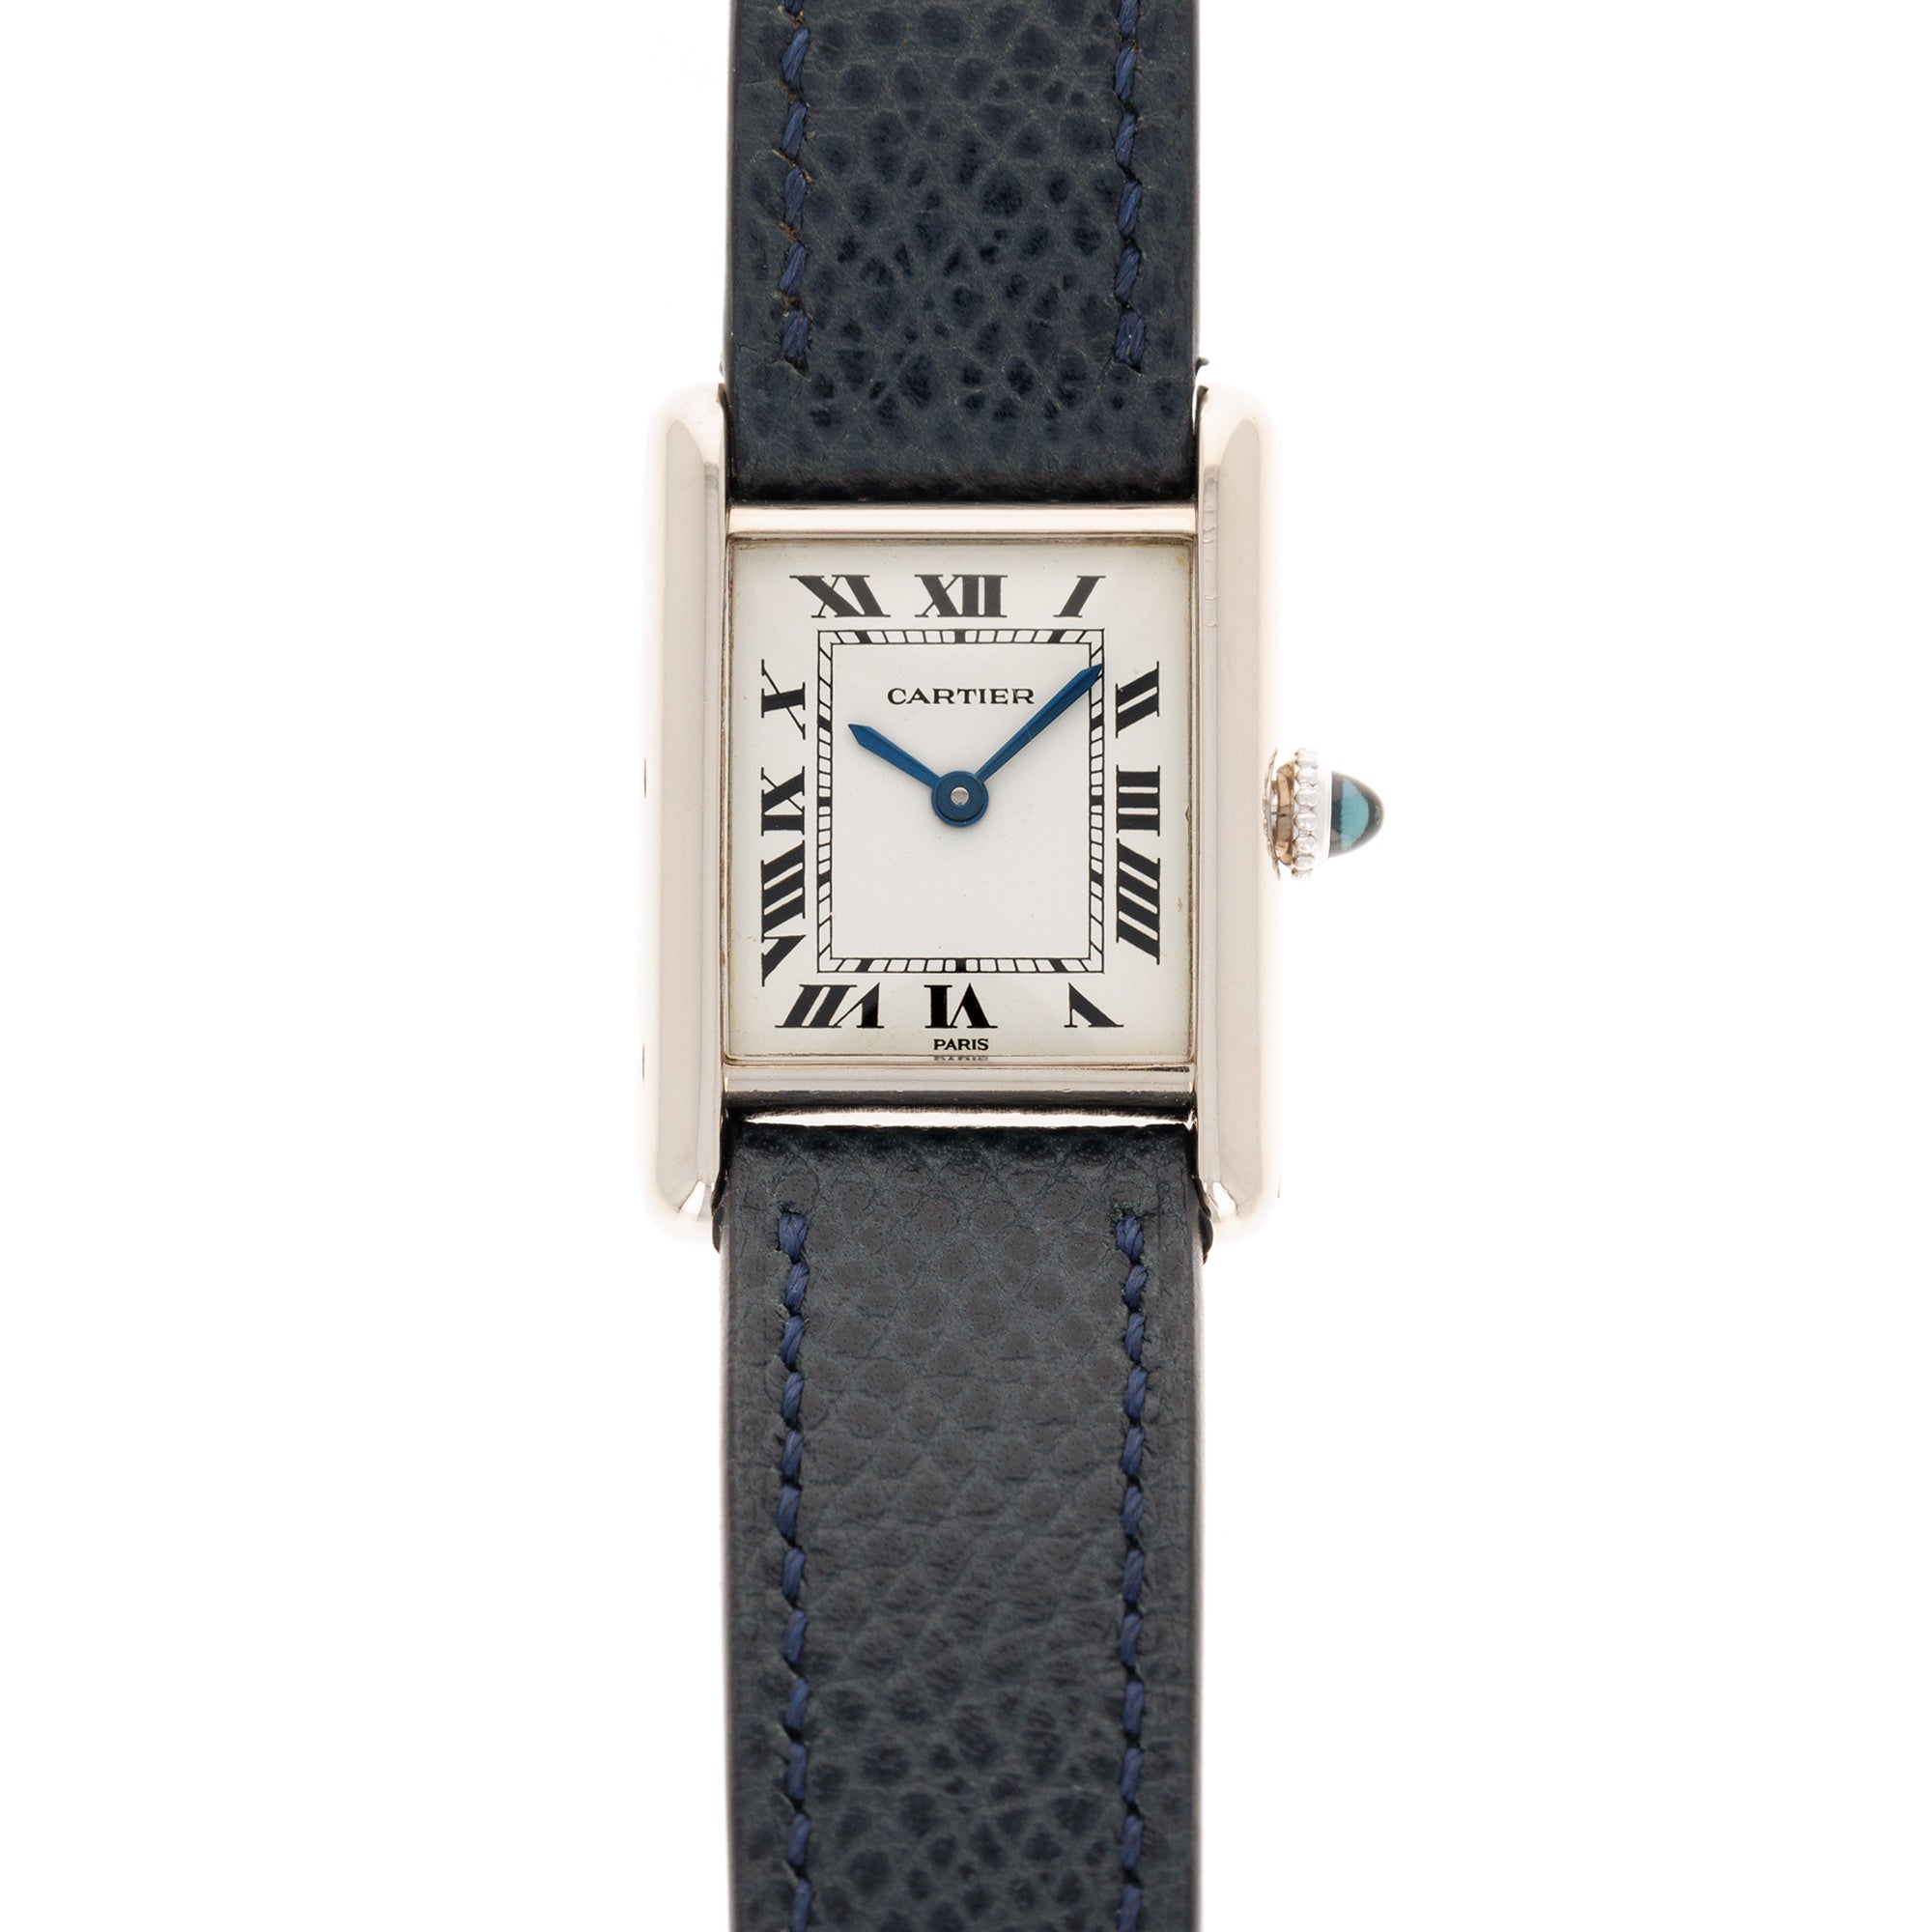 Cartier - Cartier White Gold Tank Watch - The Keystone Watches